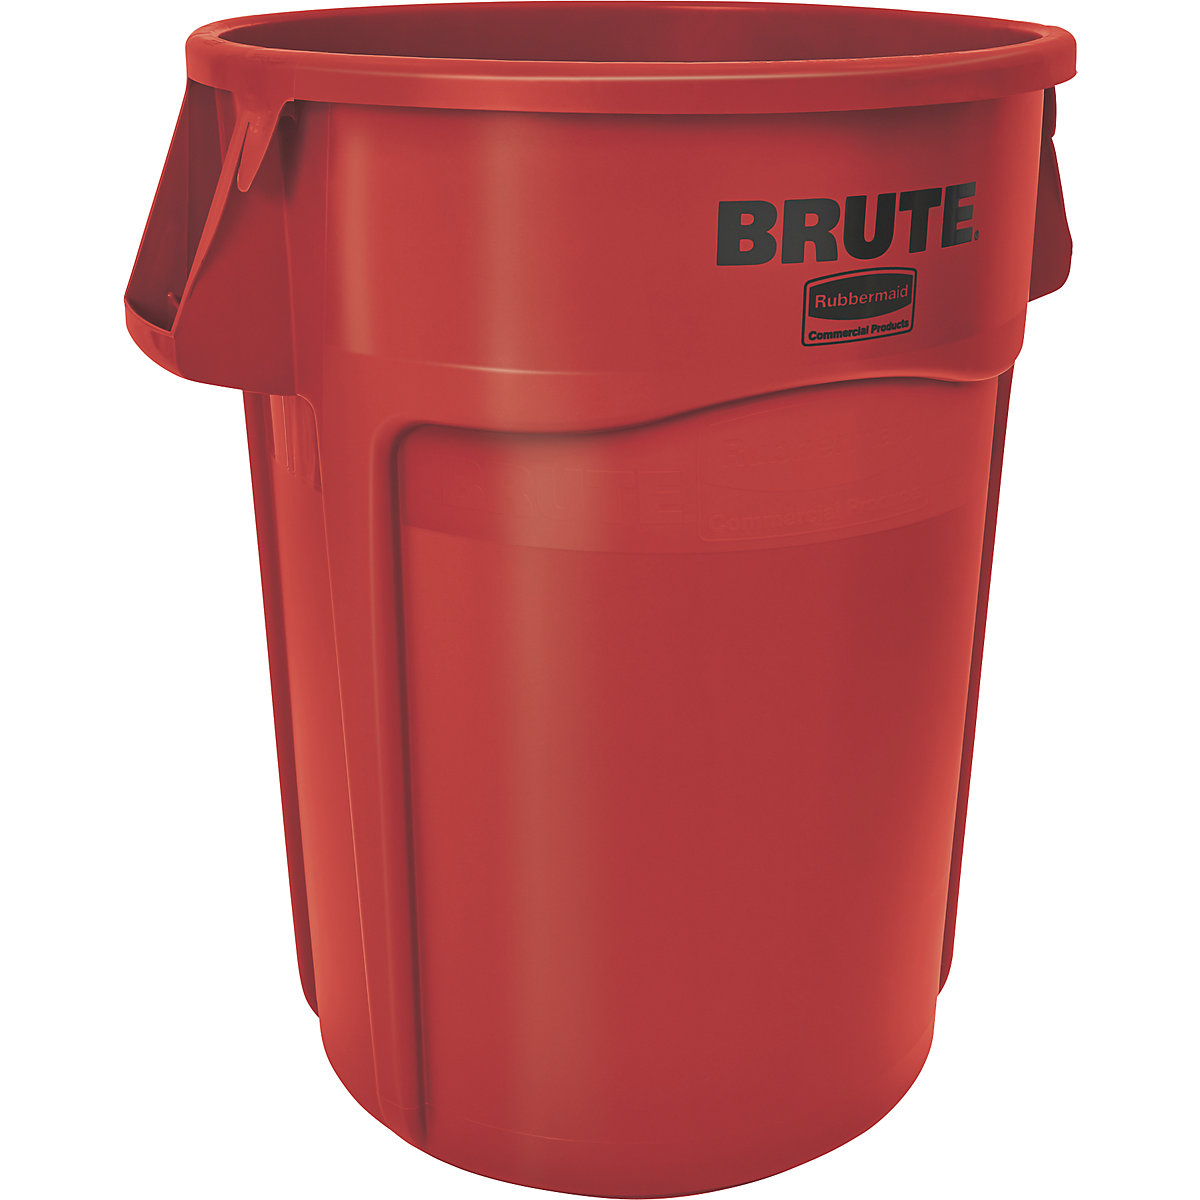 Univerzalni kontejner BRUTE®, okrugli – Rubbermaid, sadržaj 166 l, u crvenoj boji-11